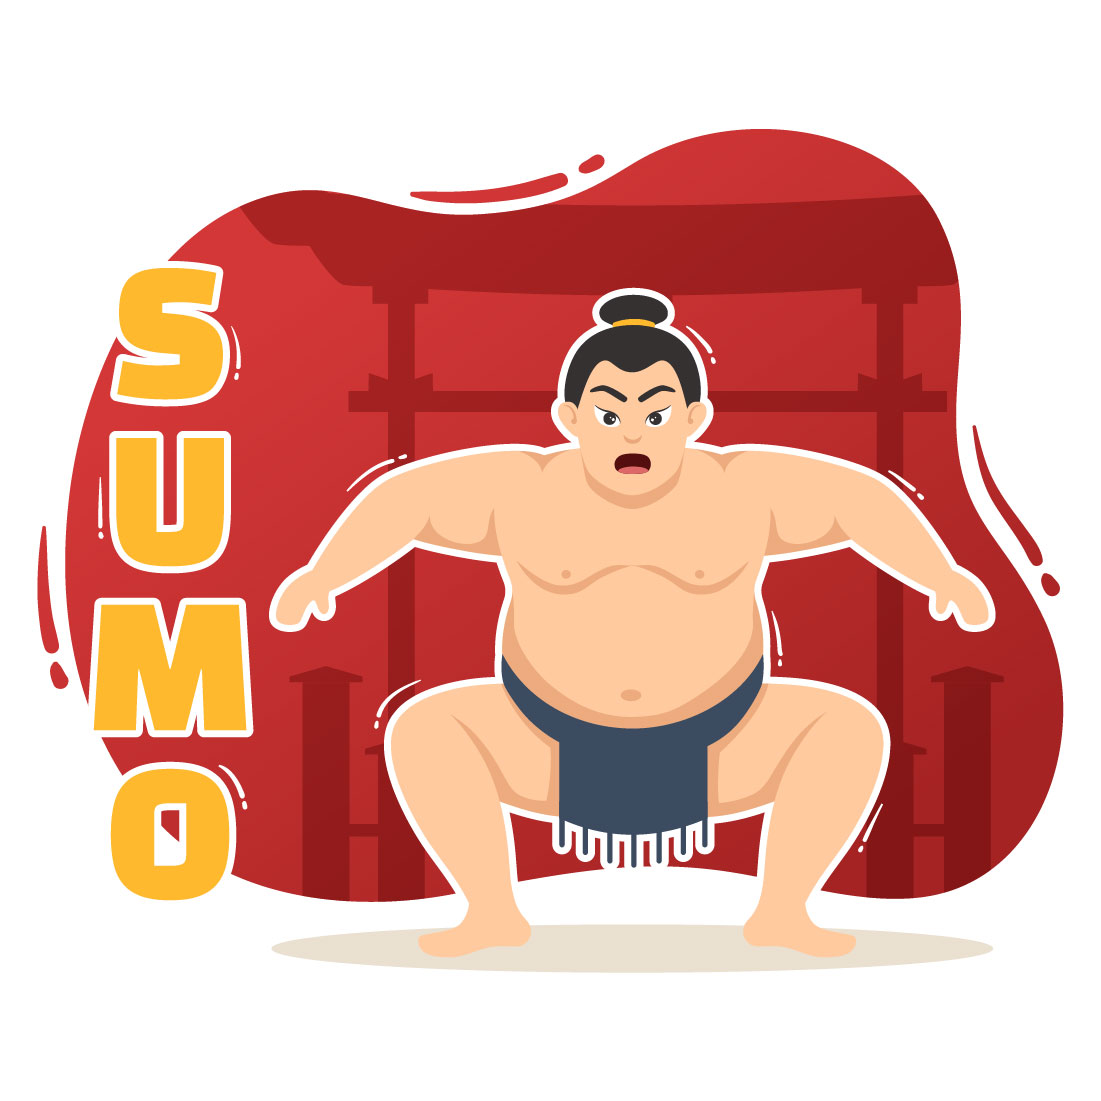 10 Sumo Wrestler Illustration preview image.